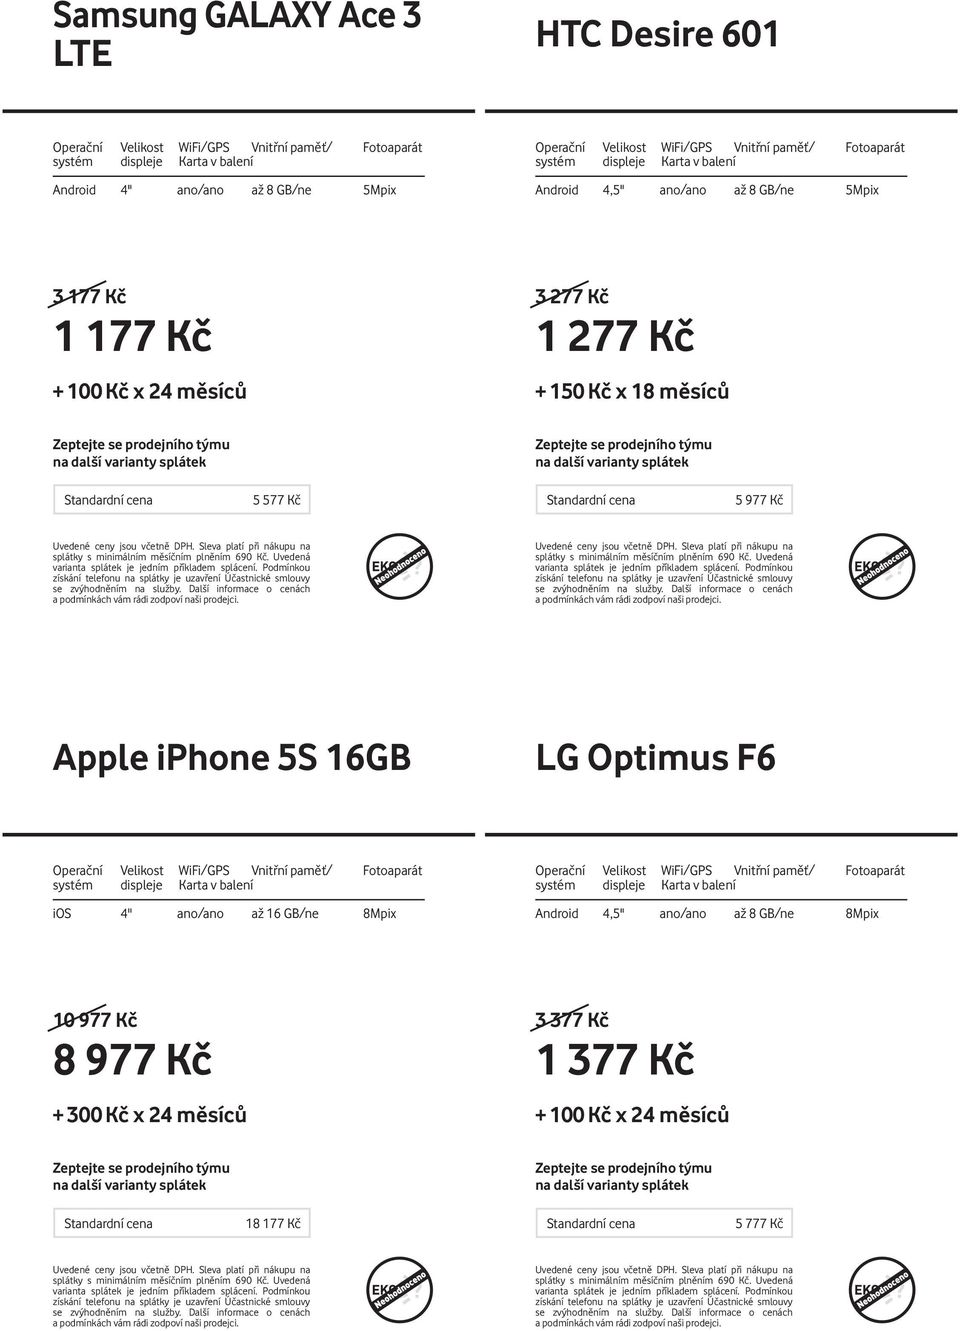 zodpoví naši Apple iphone 5S 16GB LG Optimus F6 ios 4'' ano/ano až 16 GB/ne 8Mpix Android 4,5" ano/ano až 8